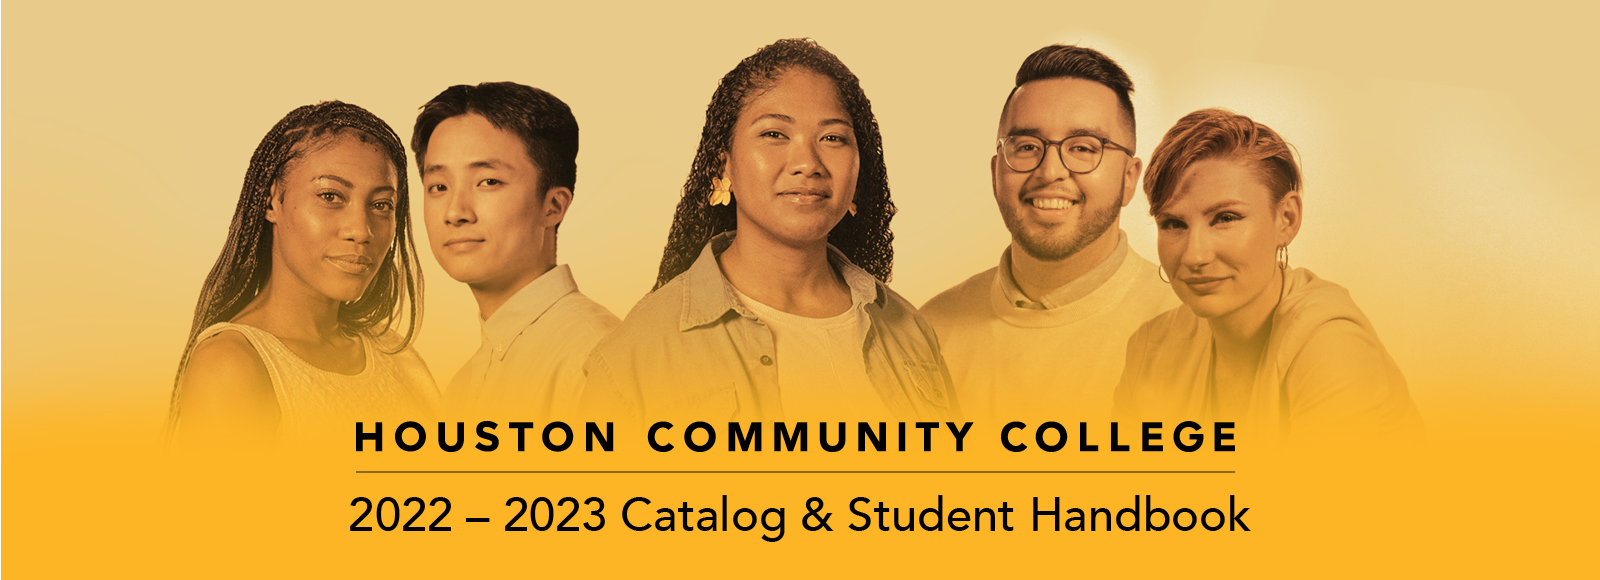 Houston Community College 2021-22 Catalog and Student Handbook graphic of graduation caps